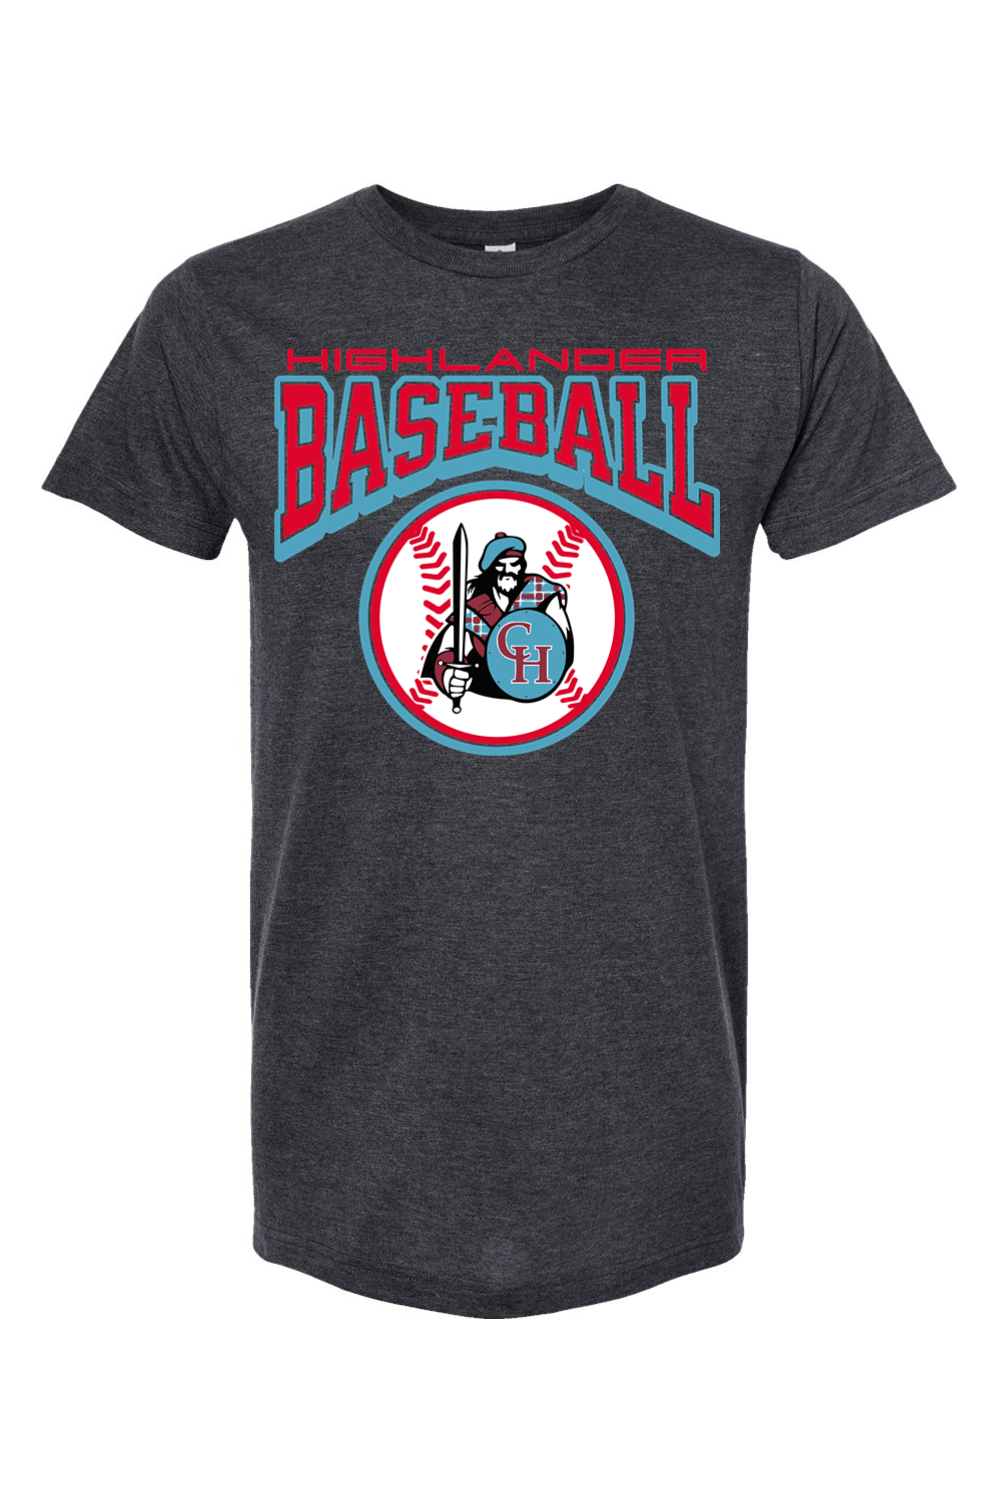 Highlander Baseball - Impact T-Shirt - Yinzylvania